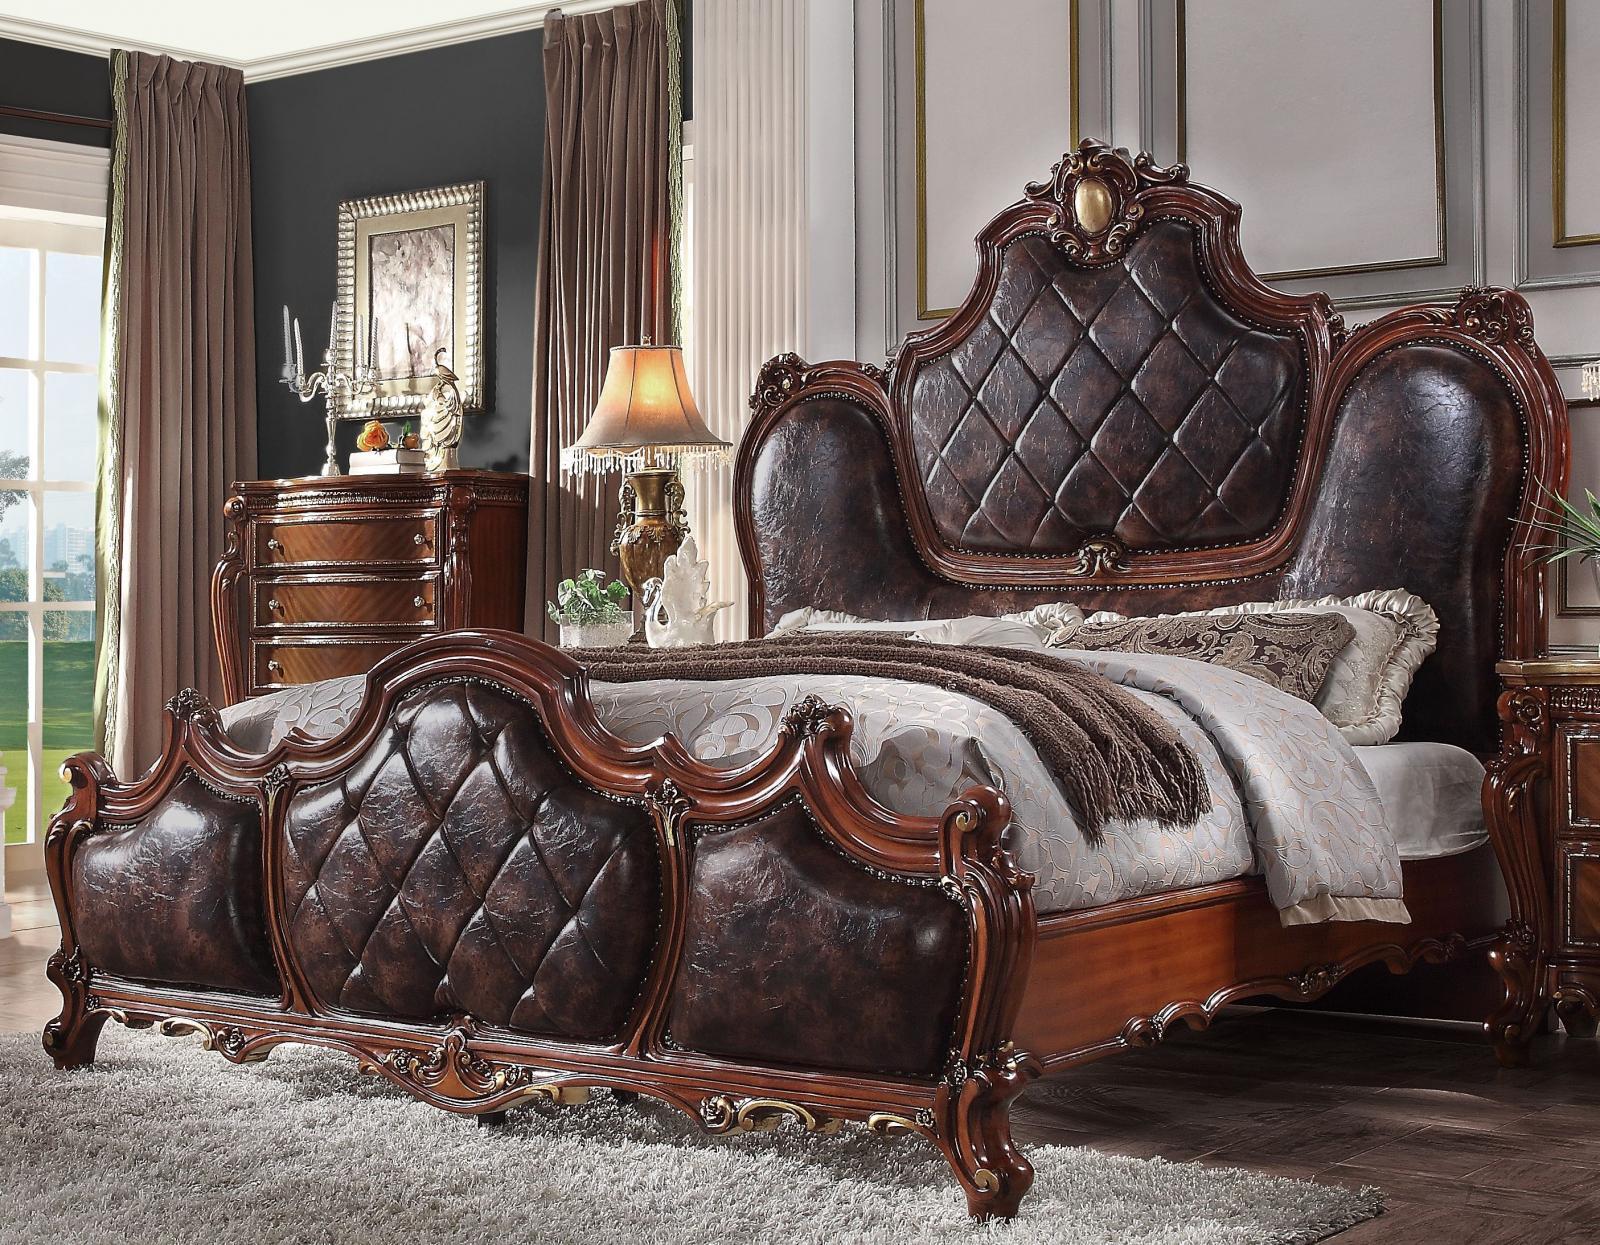 

    
Dili Upholstered Standard Bedroom Set 5Pcs QUEEN Cherry Oak Classic Vintage
